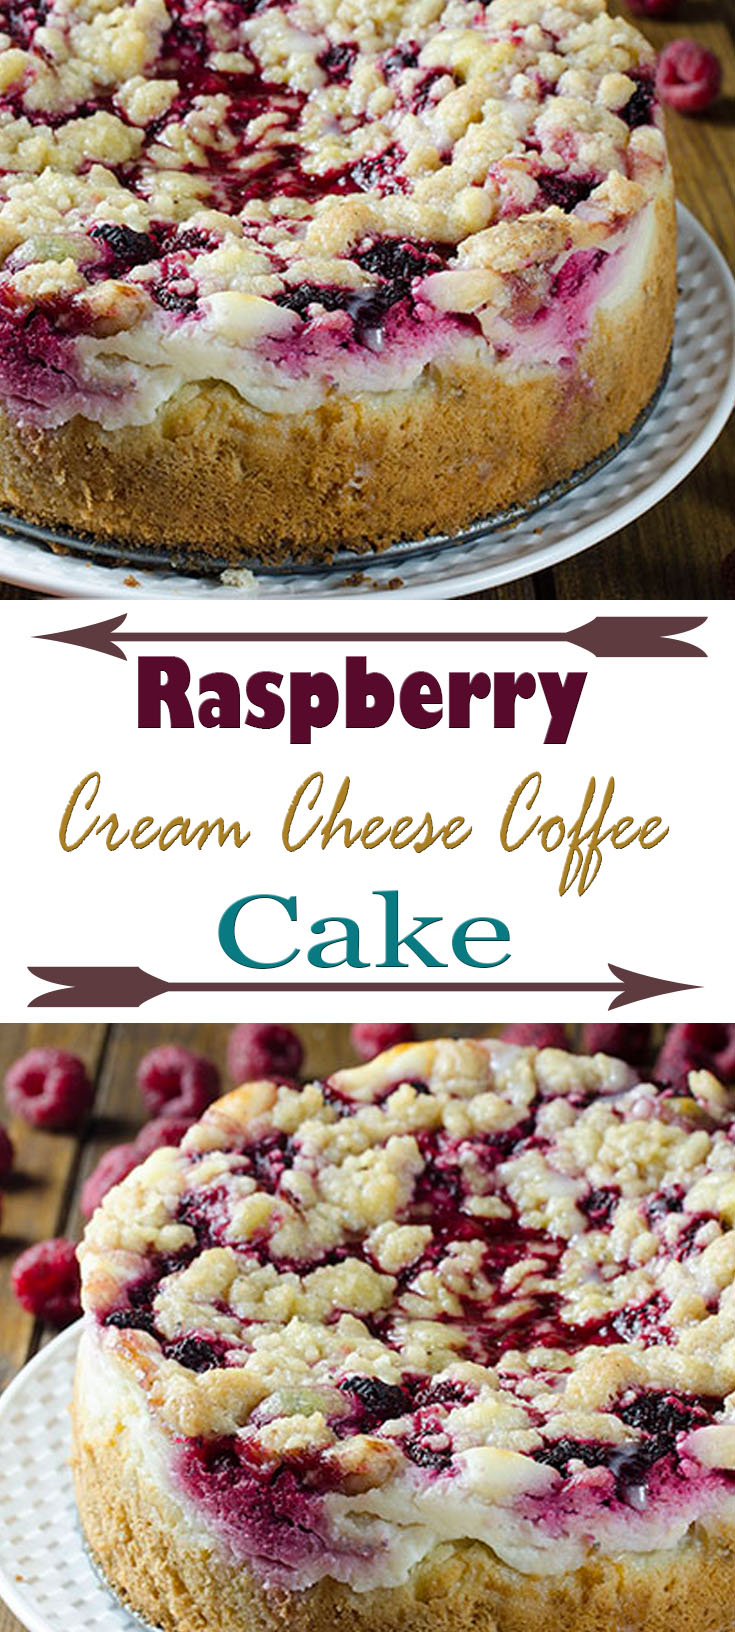 Raspberry Cream Cheese Coffee Cake r1